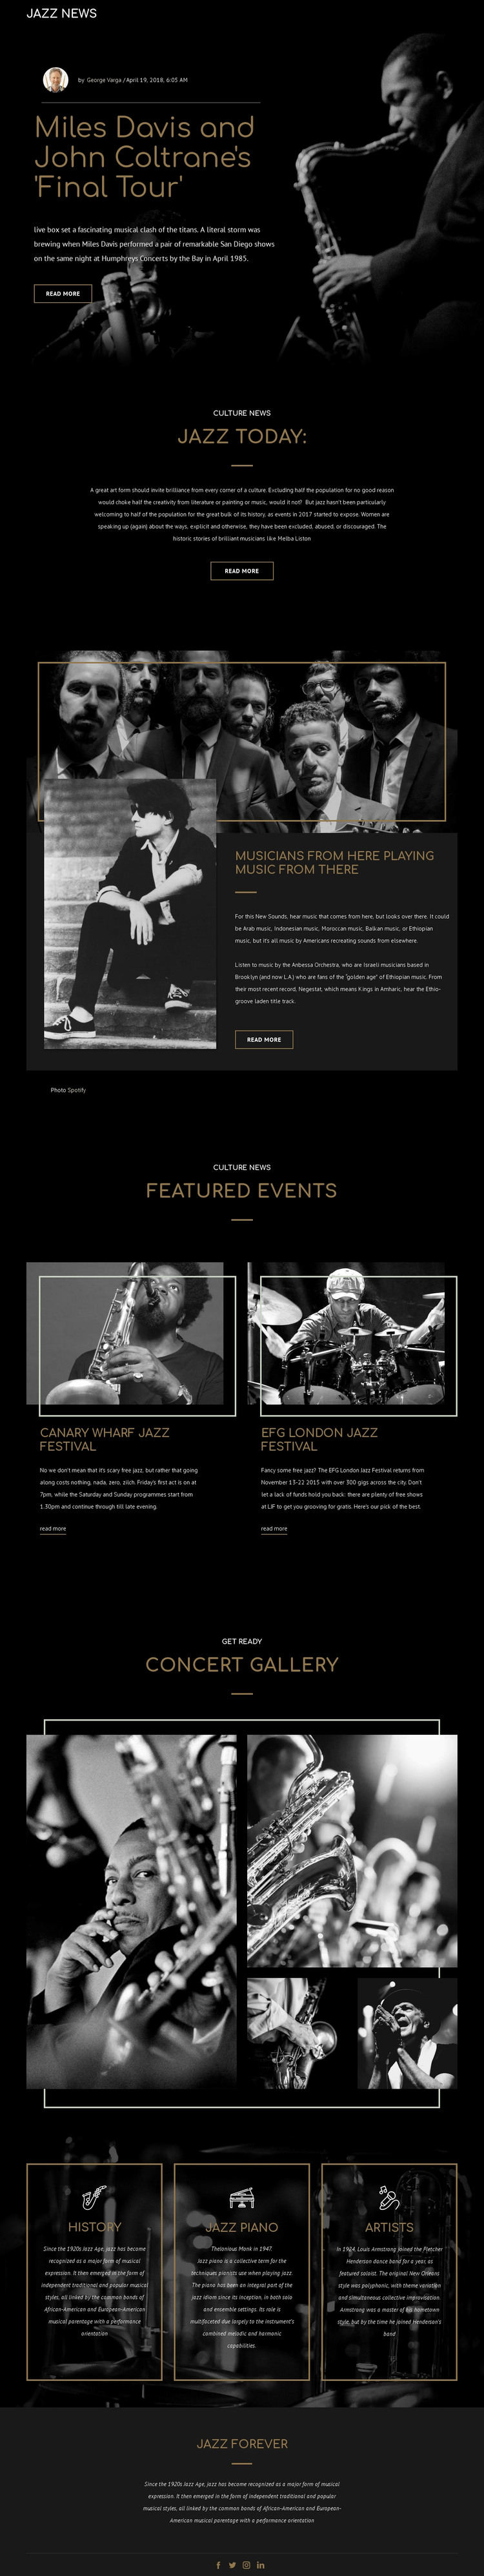 Legengs of jazz music WordPress Theme